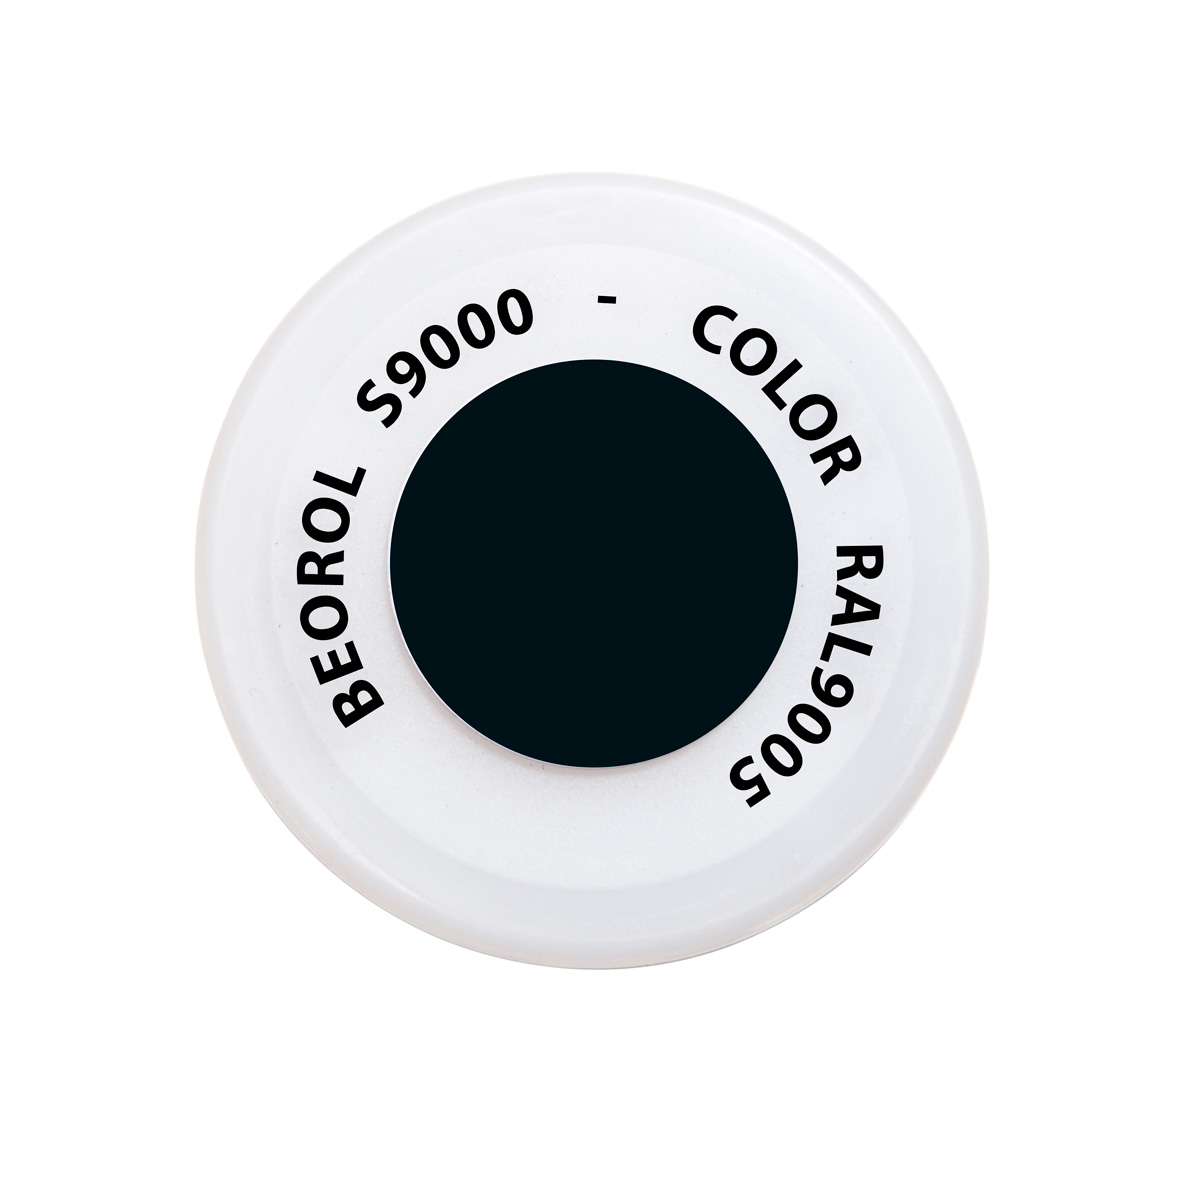 Spray paint black, glossy, Nero Lucido RAL9005 